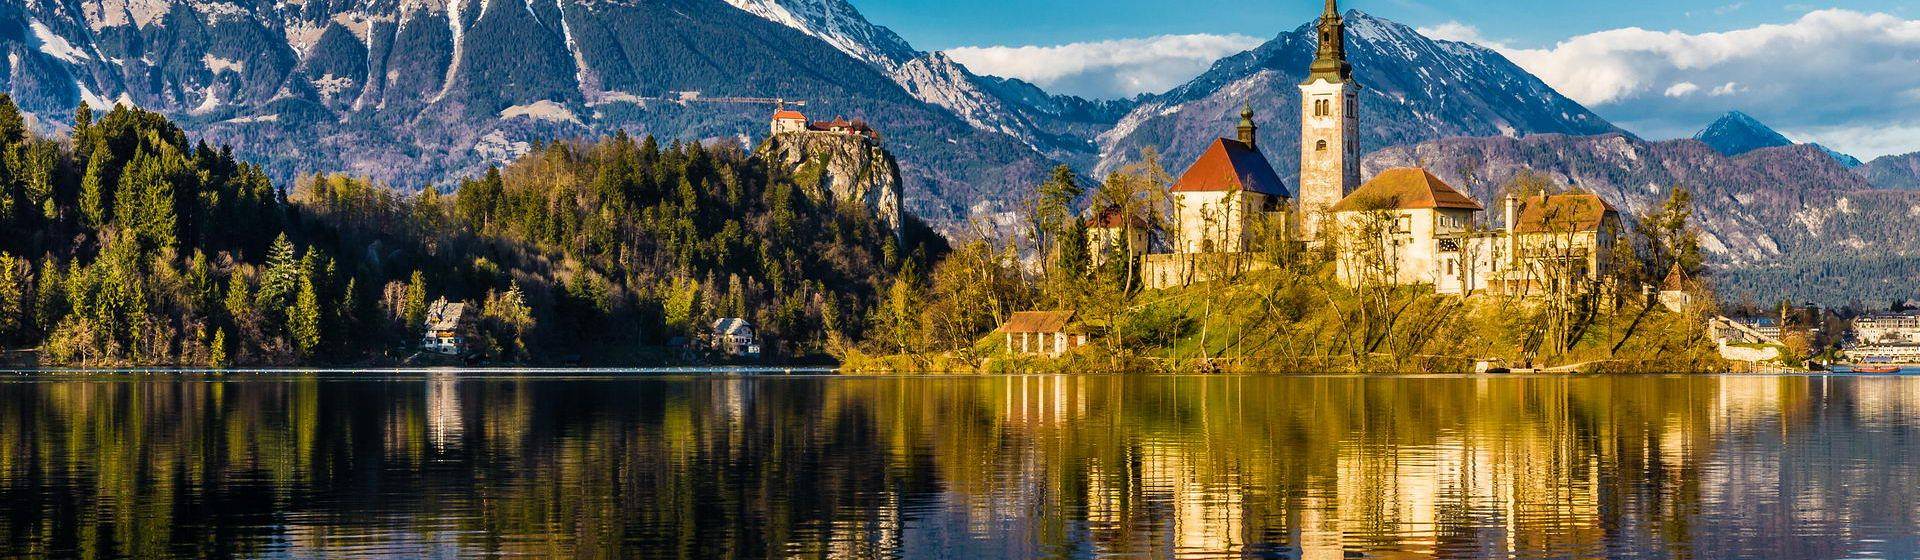 Holidays to Slovenia Image